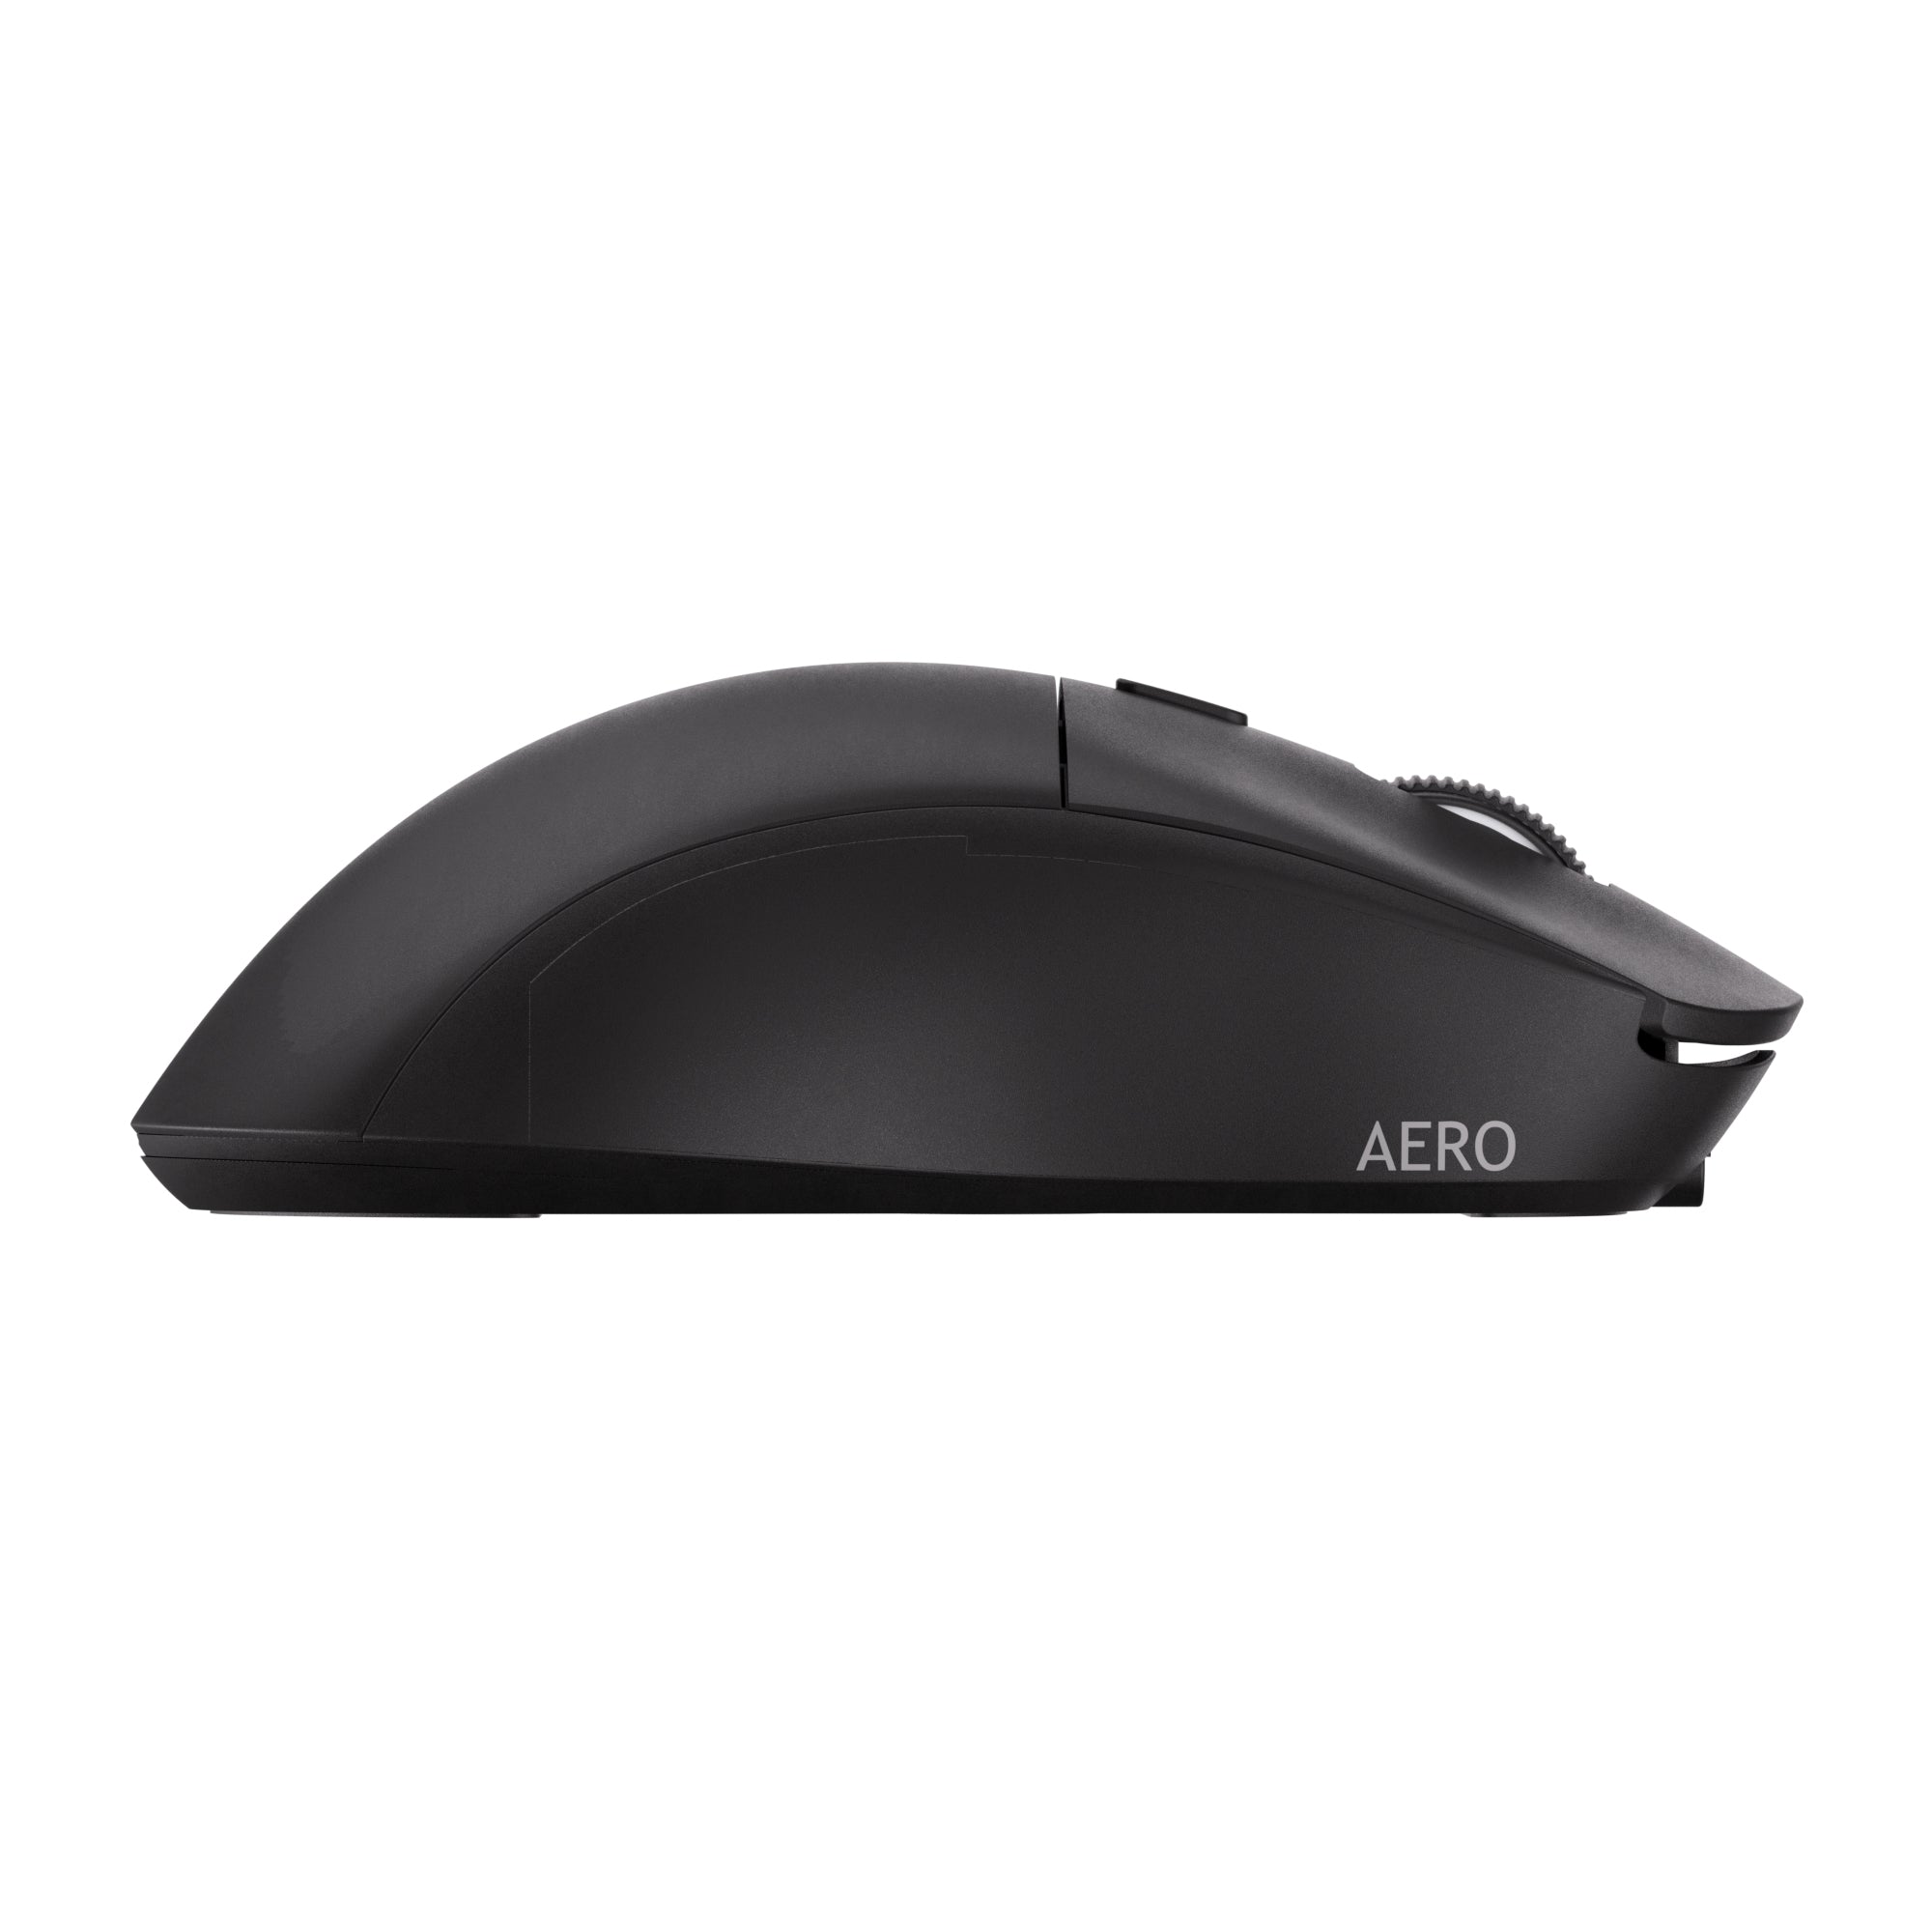 Kraken Aero - Ultra Lightweight Wireless Gaming Mouse - BLACKOUT